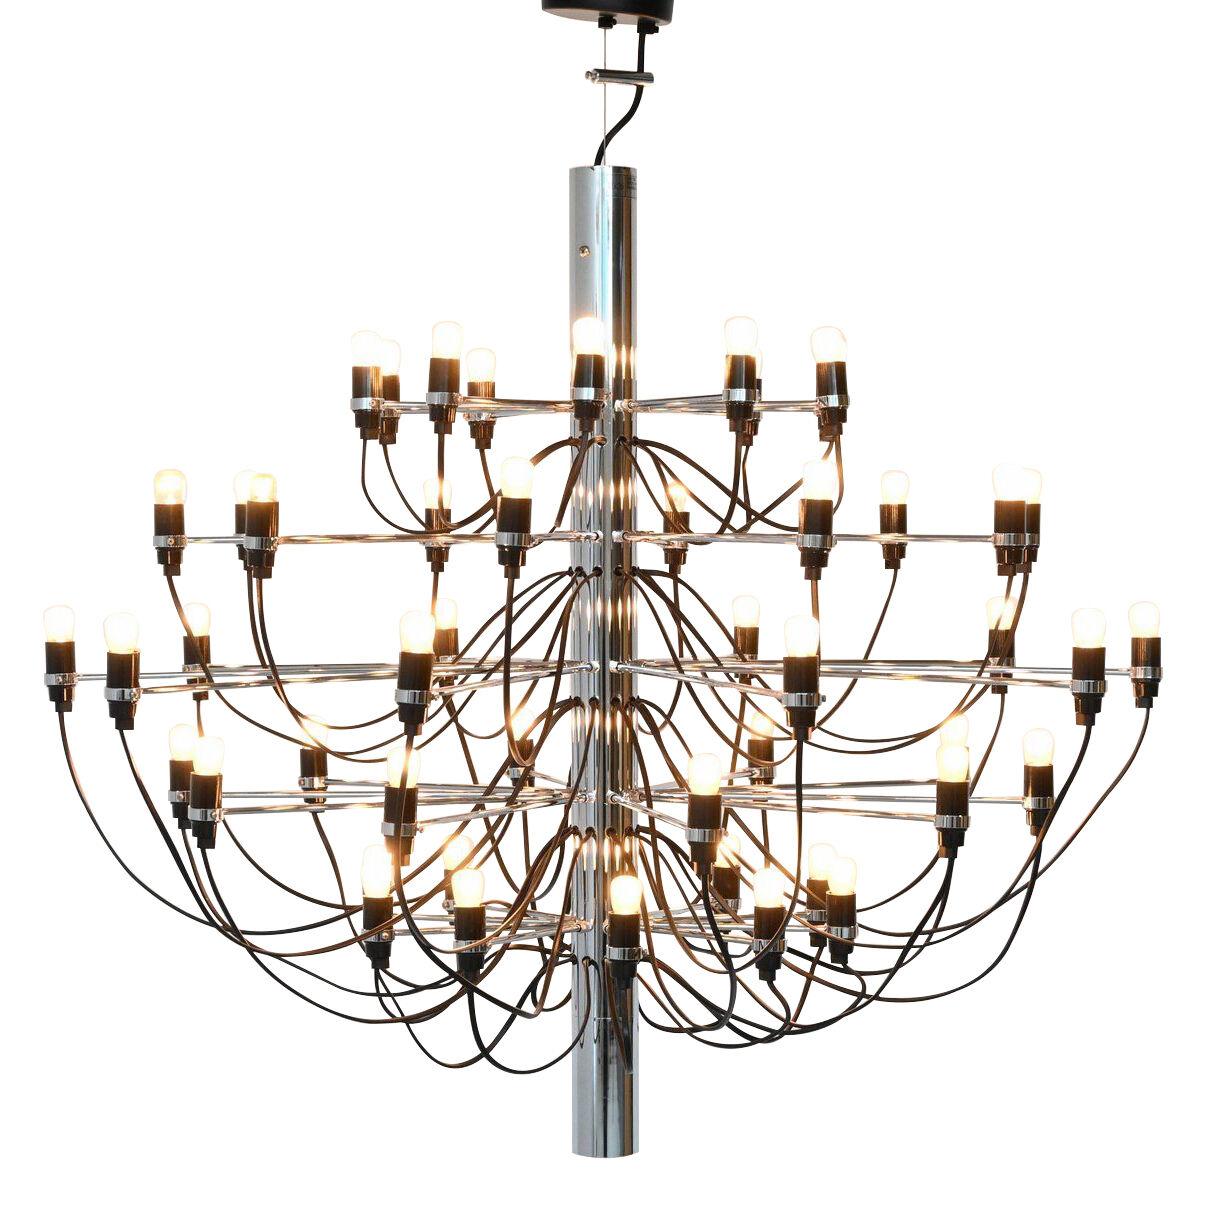 Gino Sarfatti model 2097/50 chandelier Flos Italy 1958